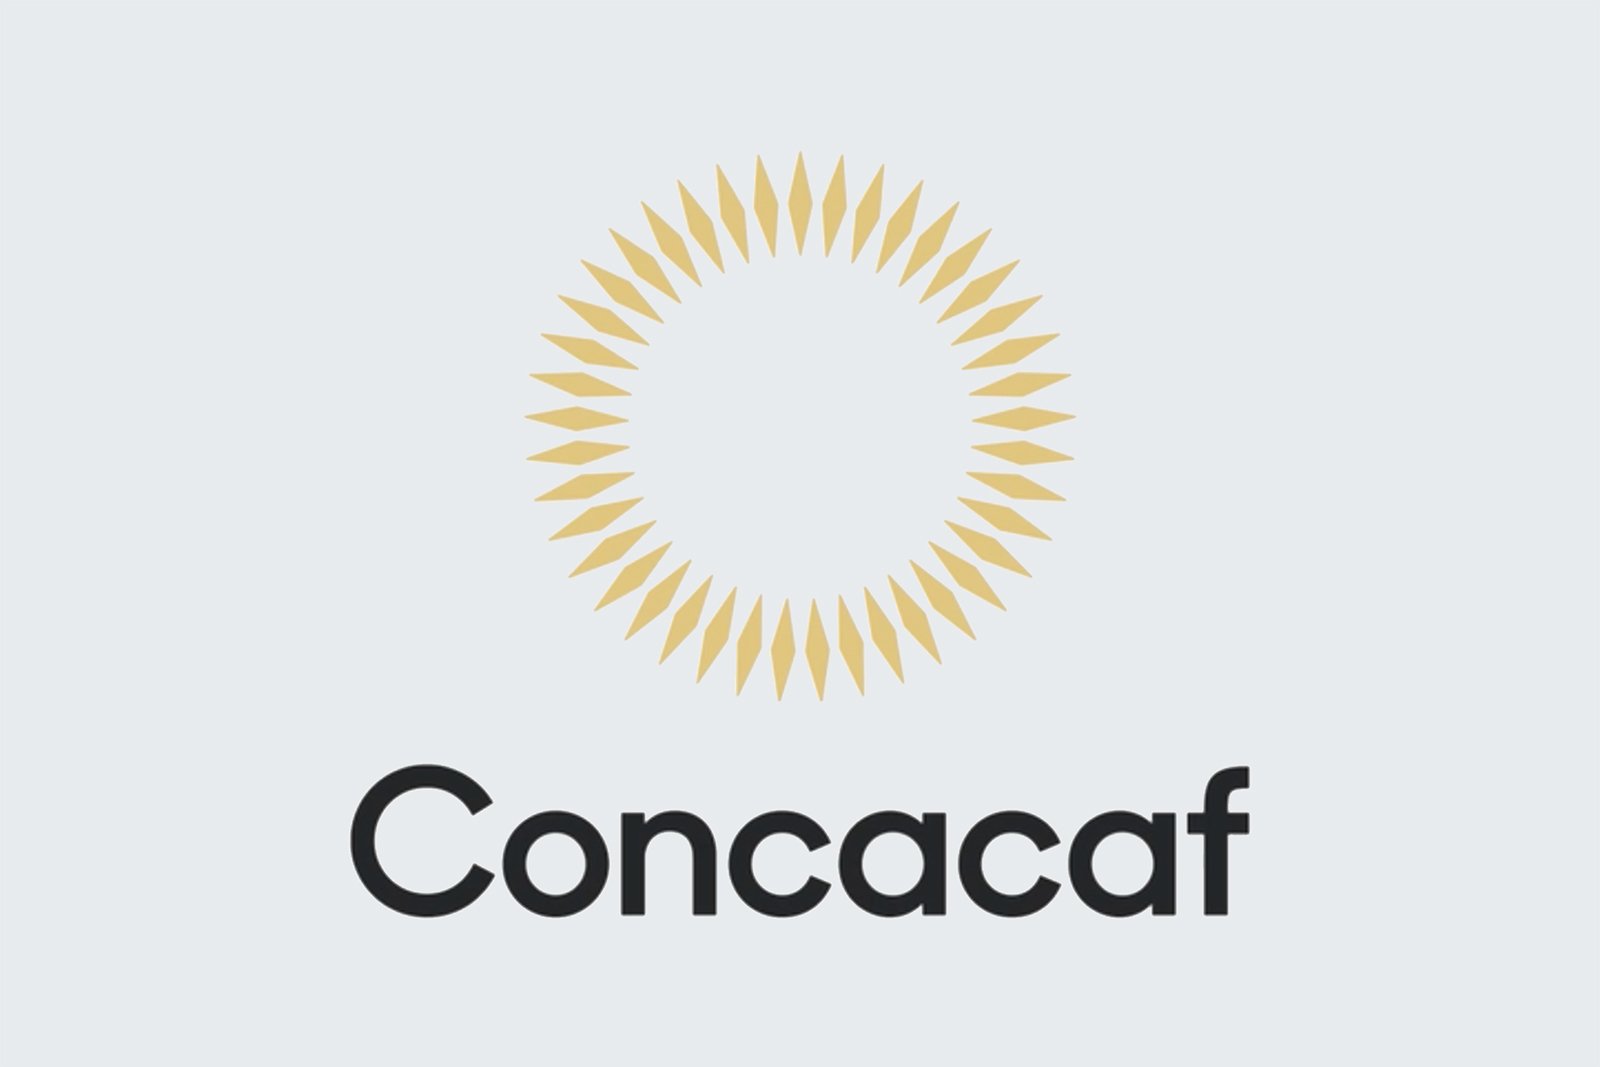 Concacaf logo